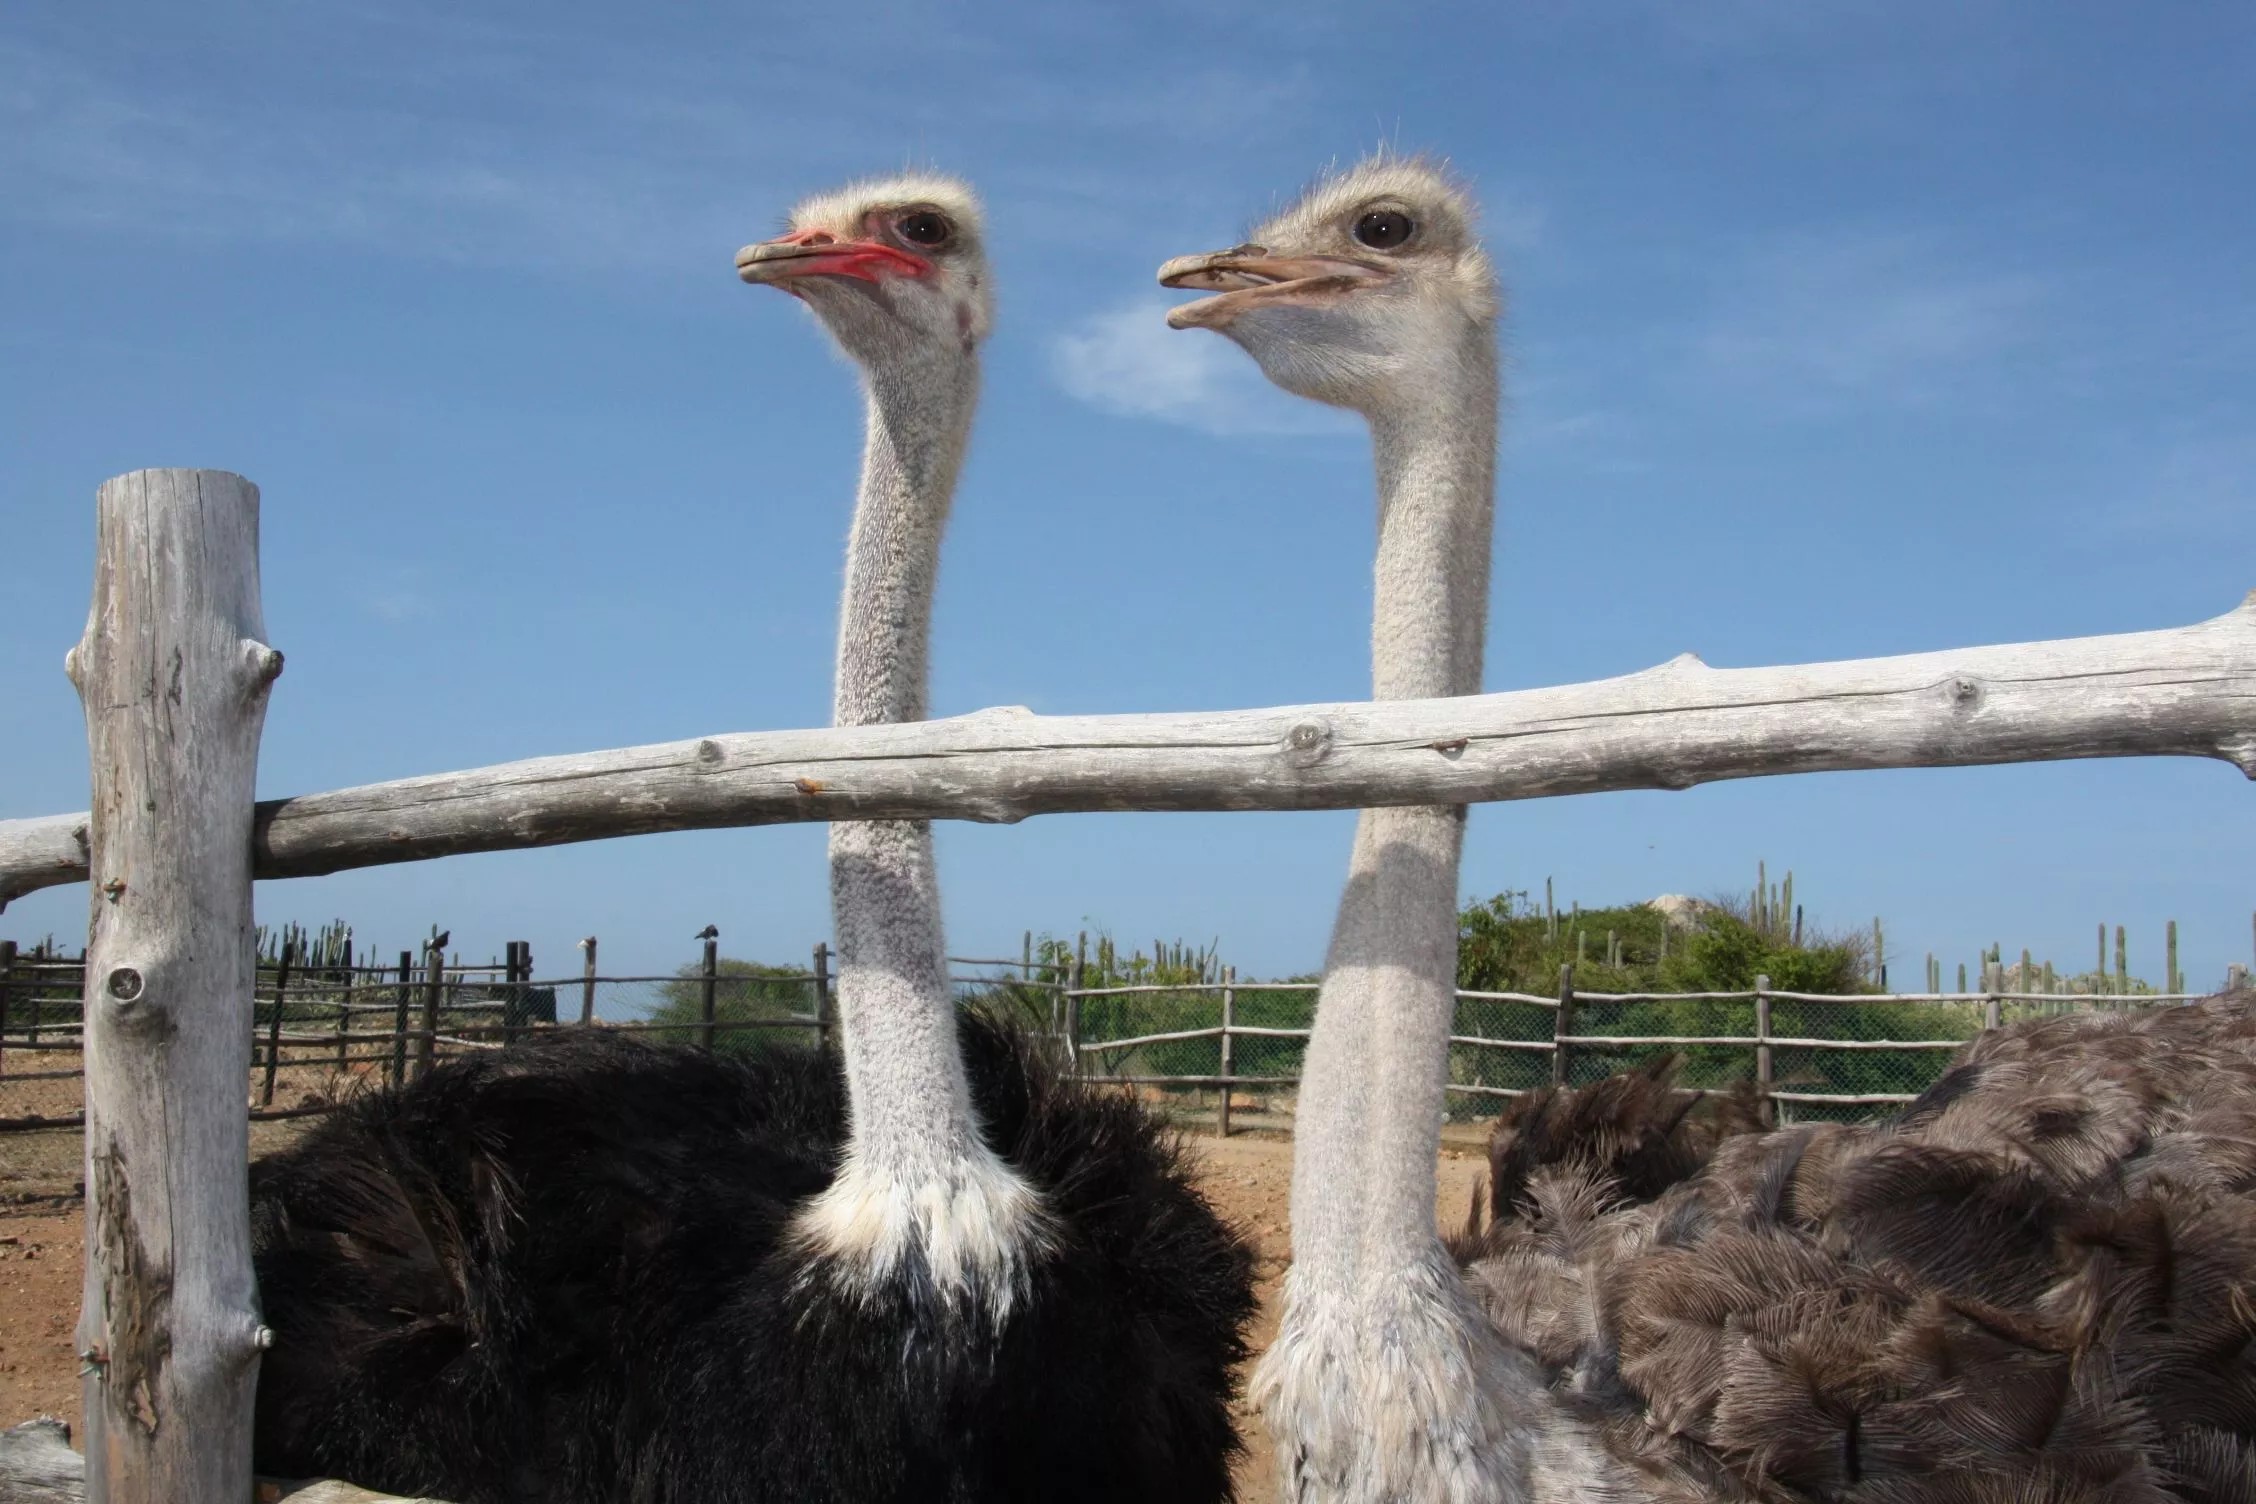 Aruba Ostrich Farm in Aruba, Caribbean | Zoos & Sanctuaries - Rated 3.5